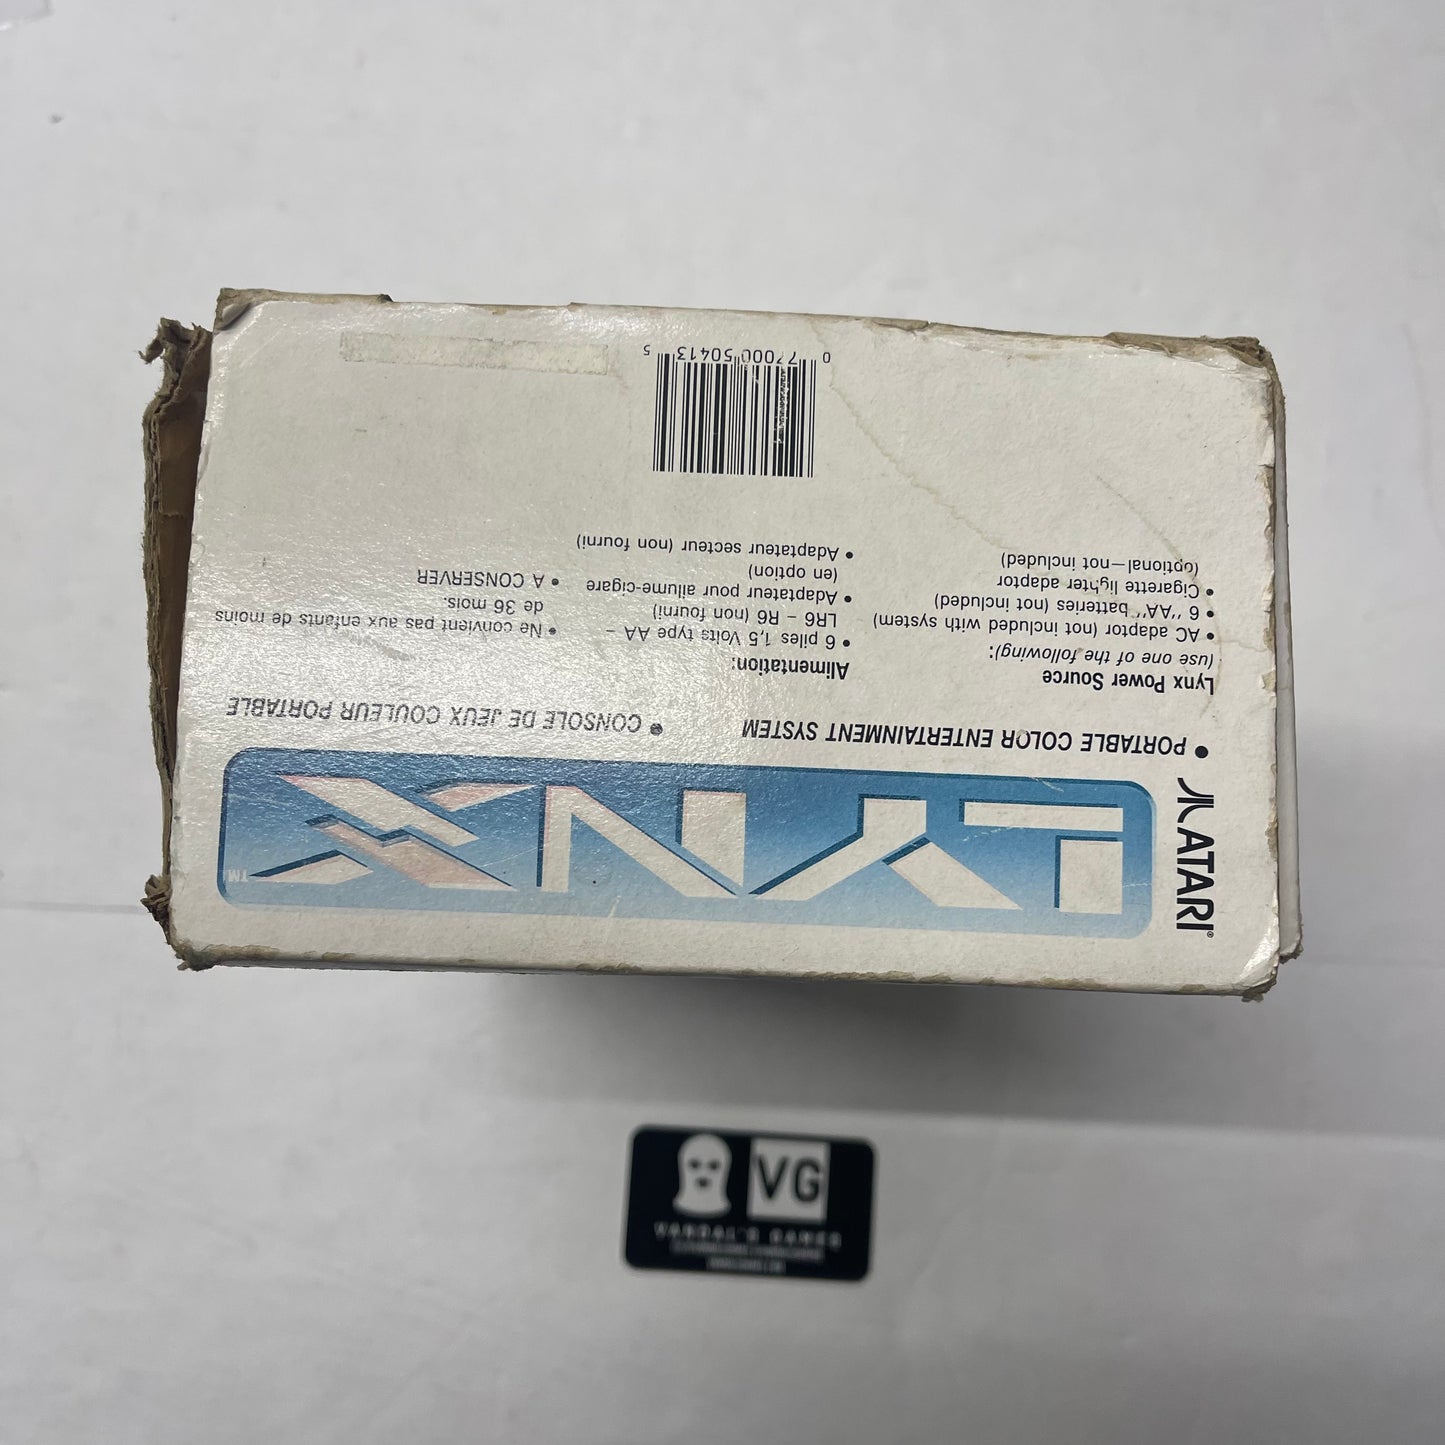 Lynx - Console Box Only No Console or Inserts Atari Lynx Color Empty Box #2802